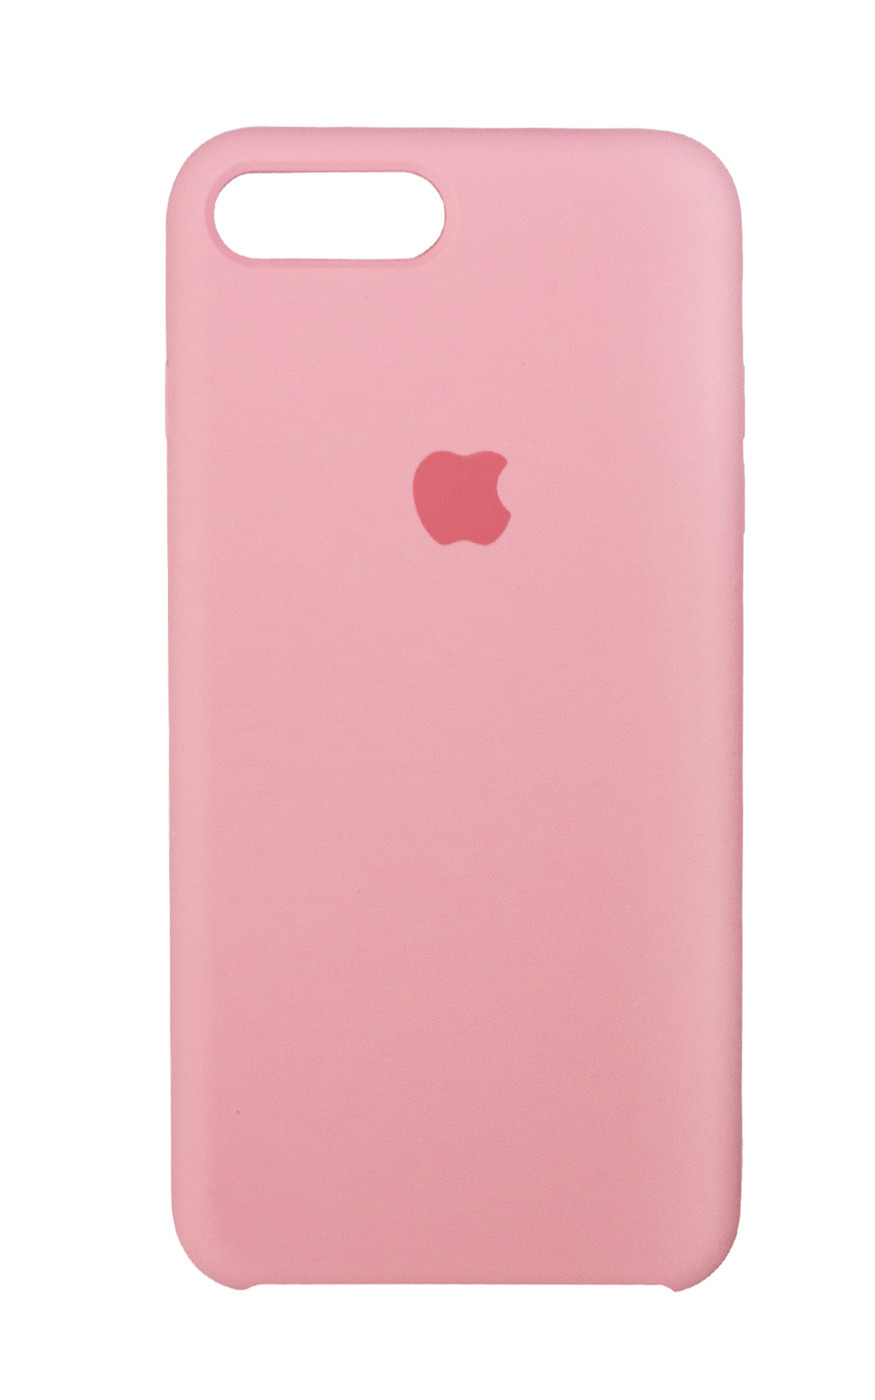 Чехол розовый iphone. Чехол для iphone 7plus 8plus. Чехол силиконовый Silicone Case для iphone 7 Plus/8 Plus. Iphone 8 Plus Pink. Чехол Pink iphone 8+.